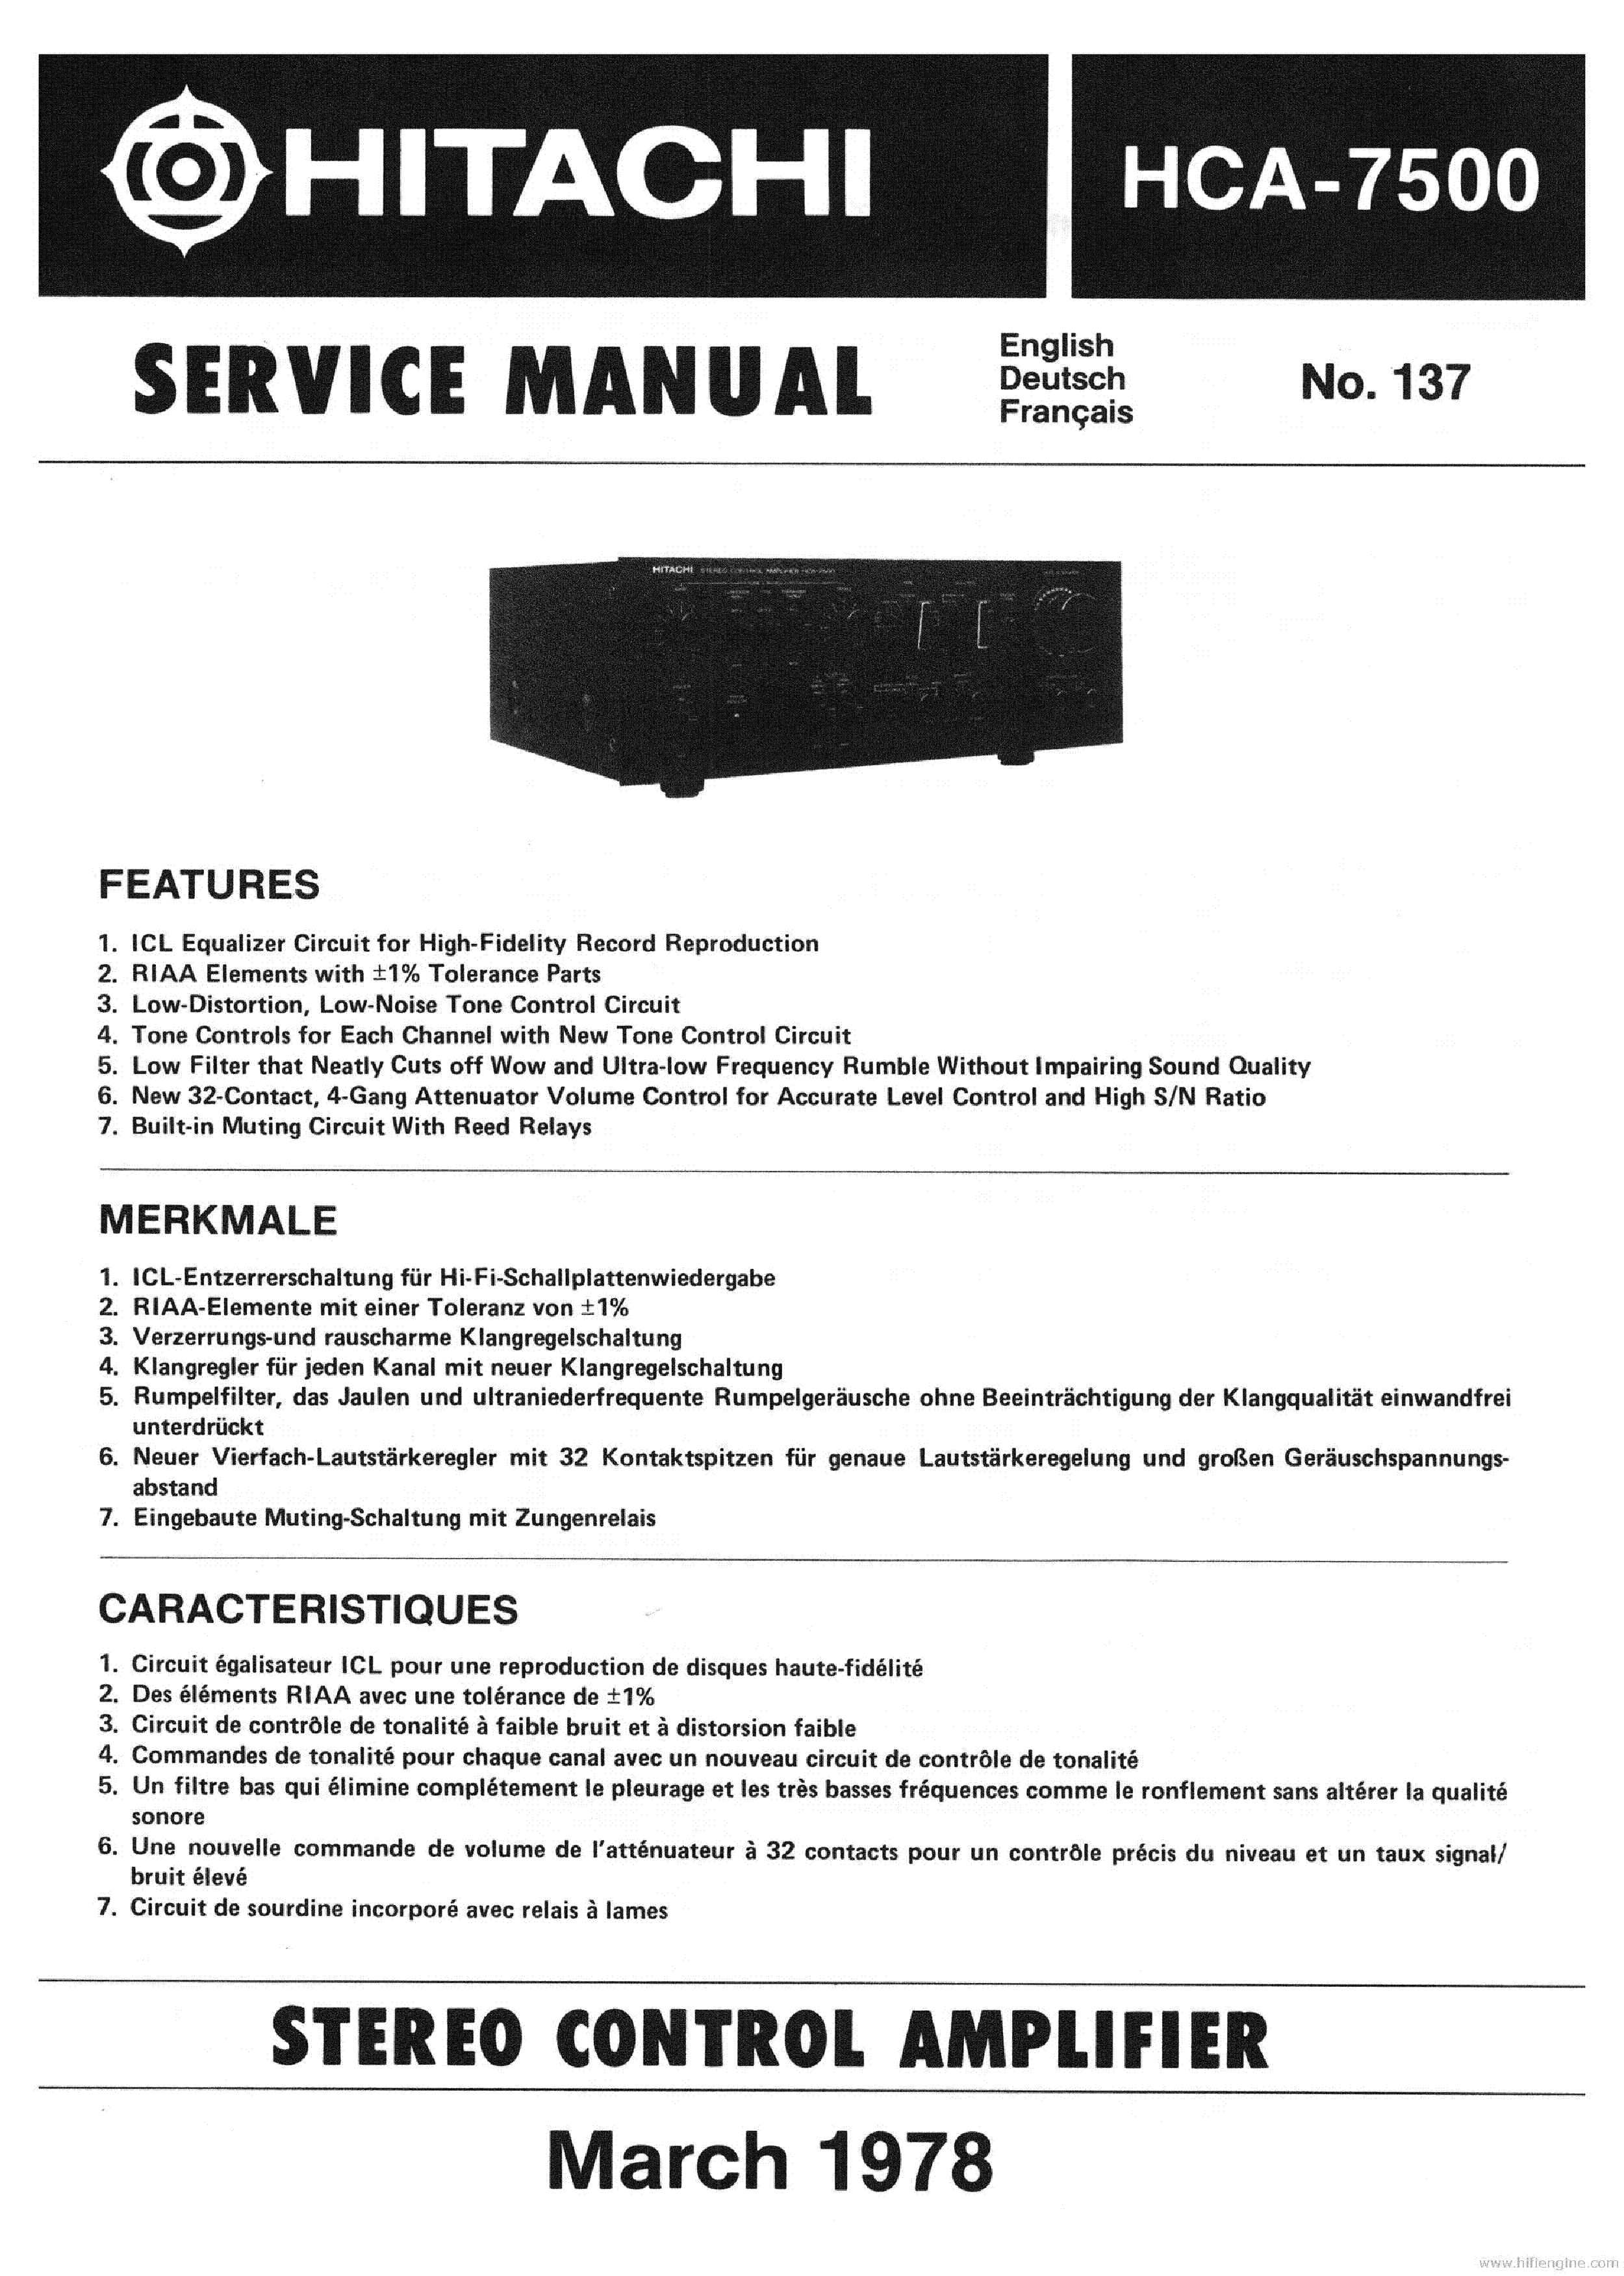 Service Manual-Anleitung für Hitachi HCA-7500 MKII 